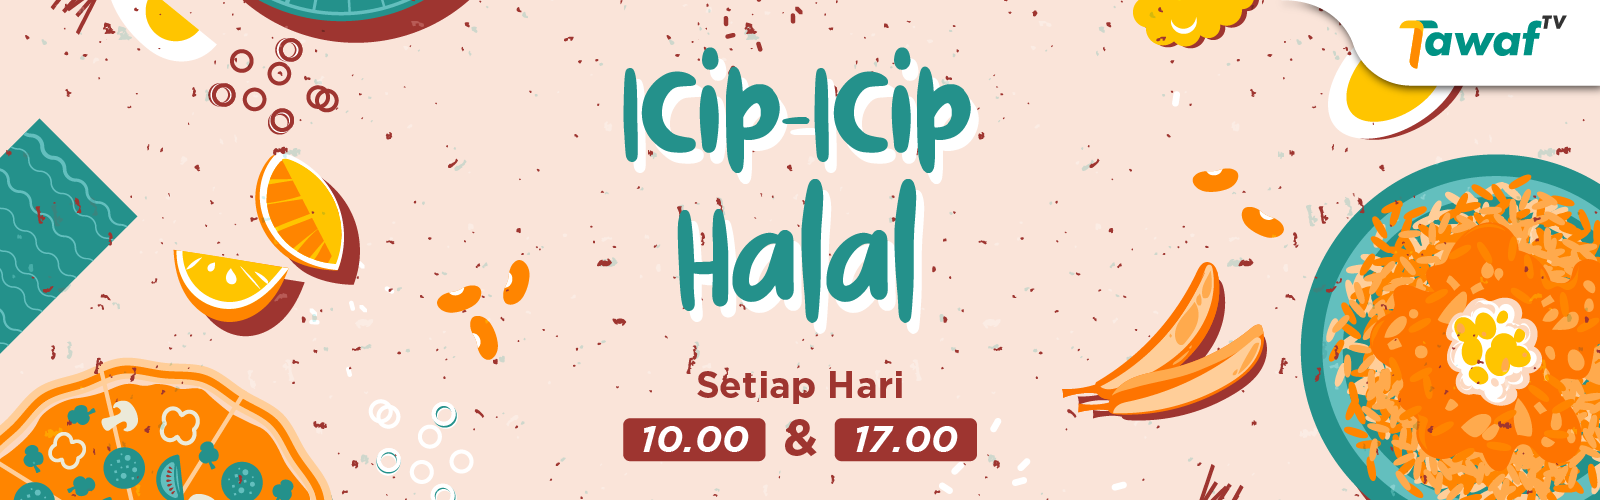 ICIP ICIP HALAL (1600x500 px)